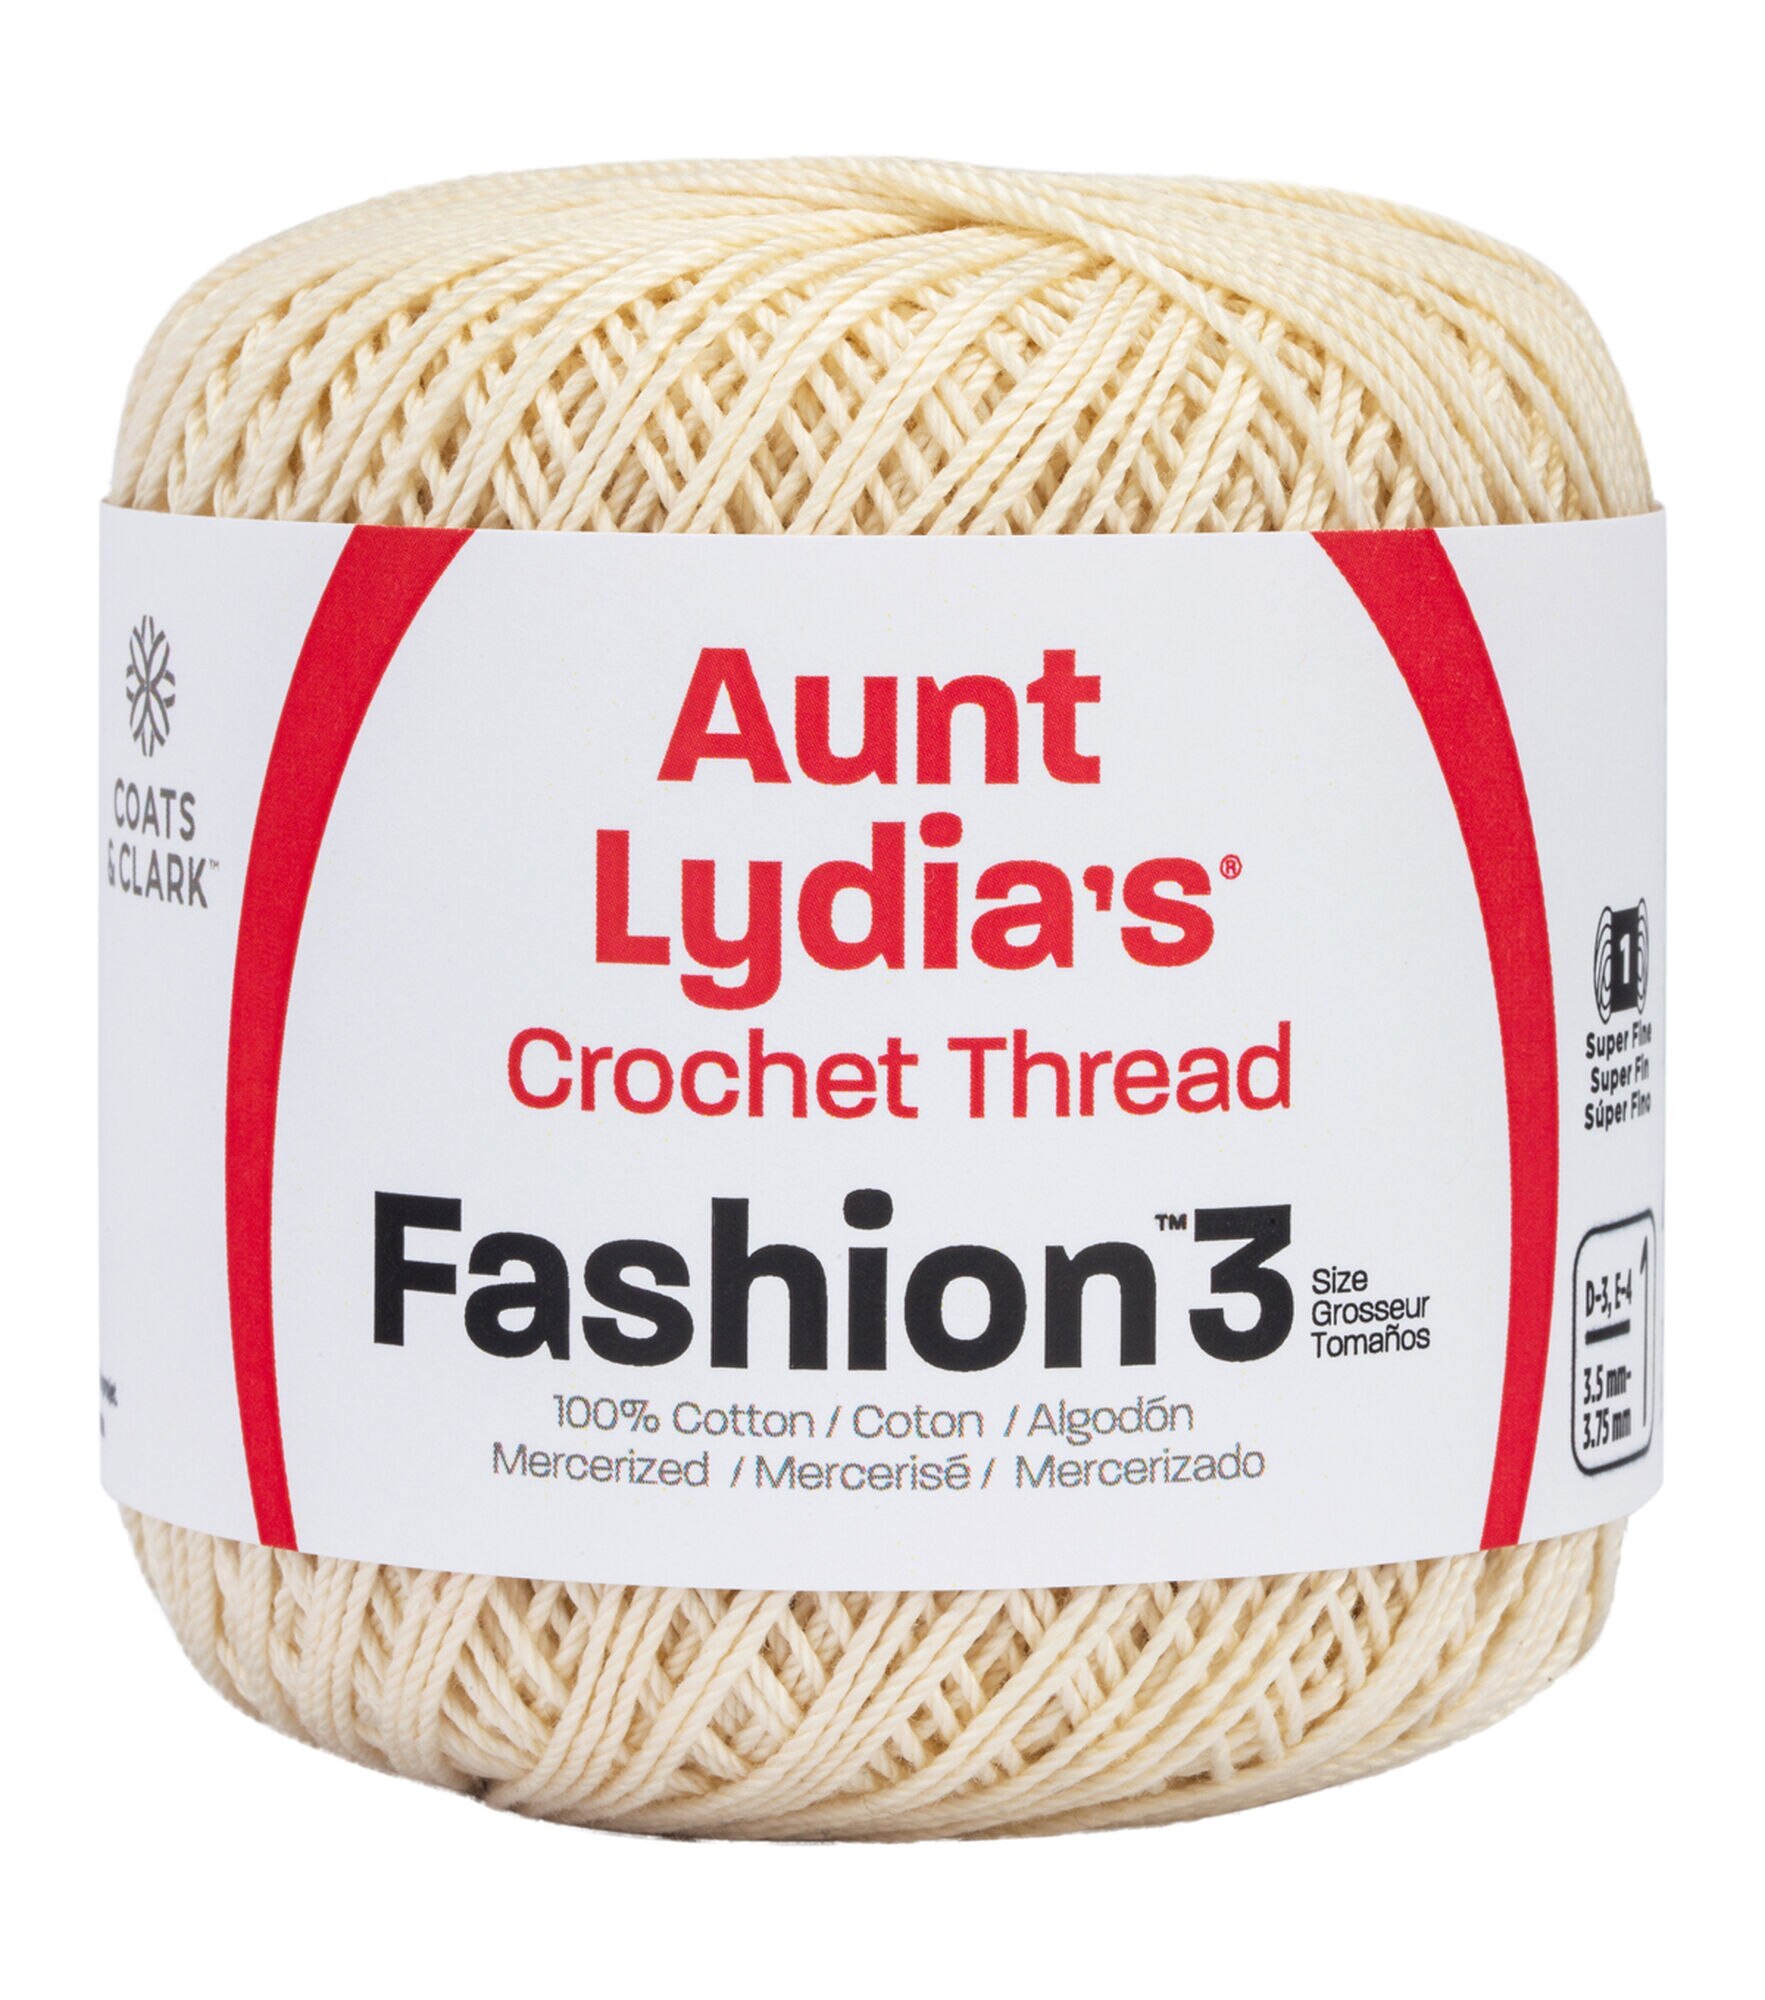 Coats And Clark Aunt Lydia's Classic Crochet Thread - Size 10 - Purple